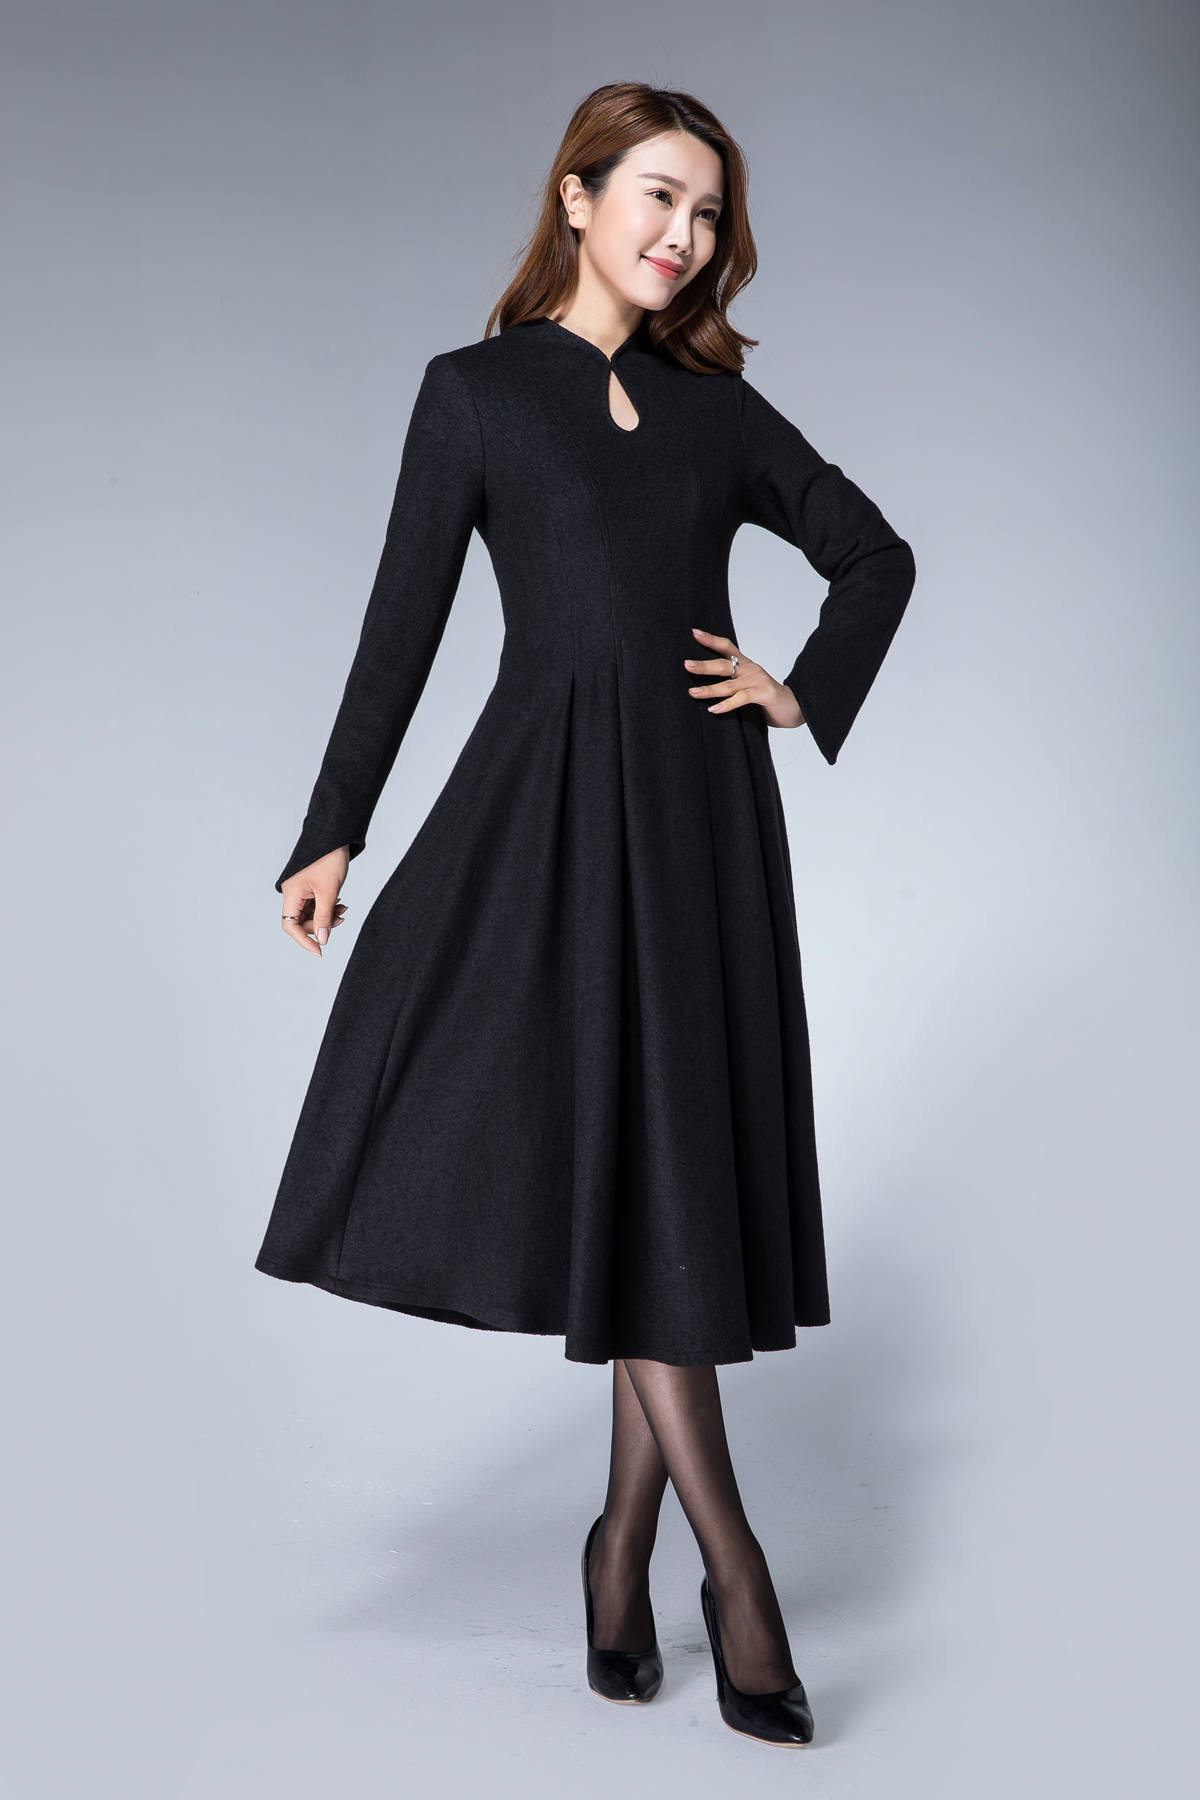 50s dress black wool dress pleated dress winter dress | Etsy